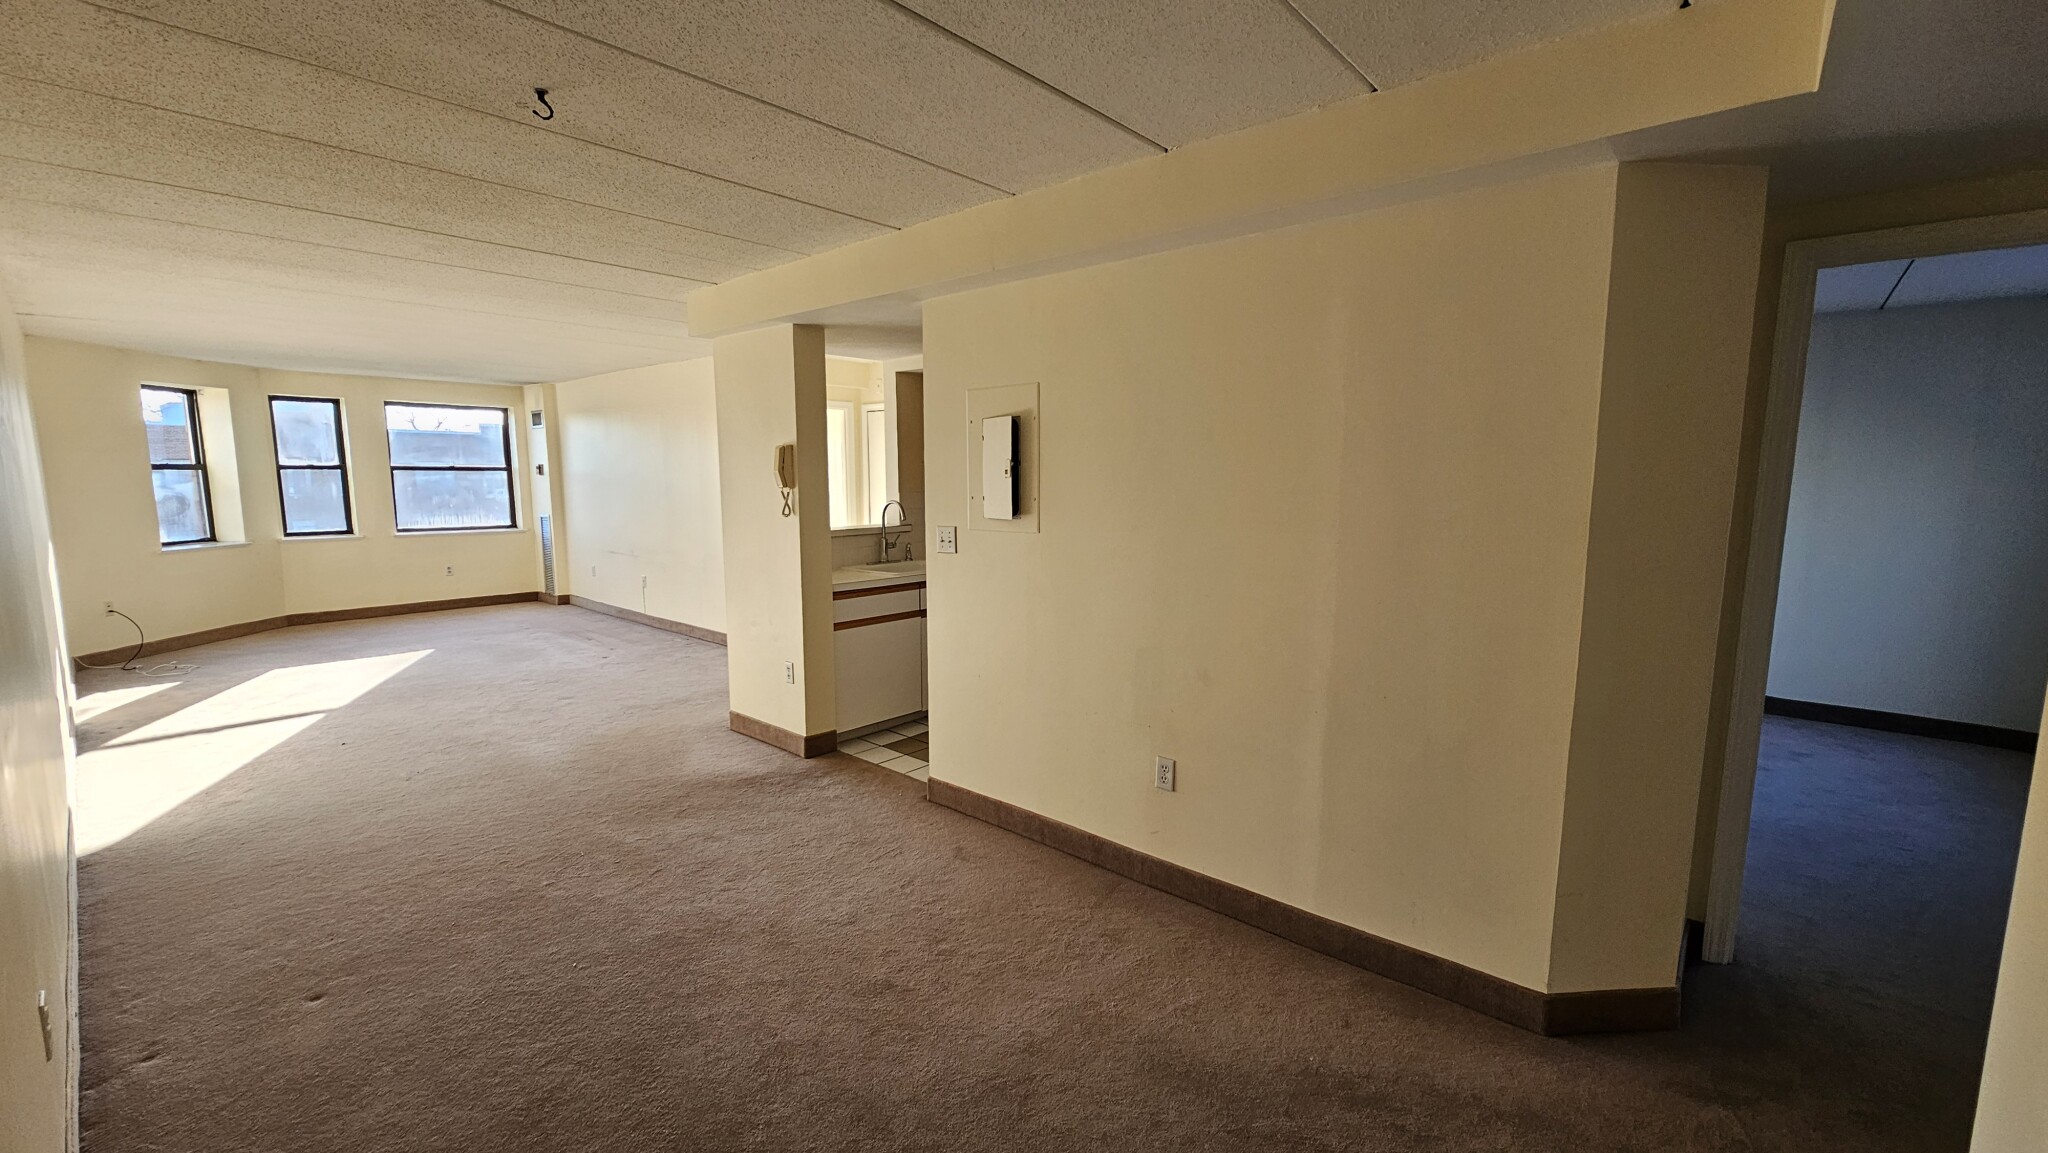 Photos of apartment on Cypress Rd.,Boston MA 02135